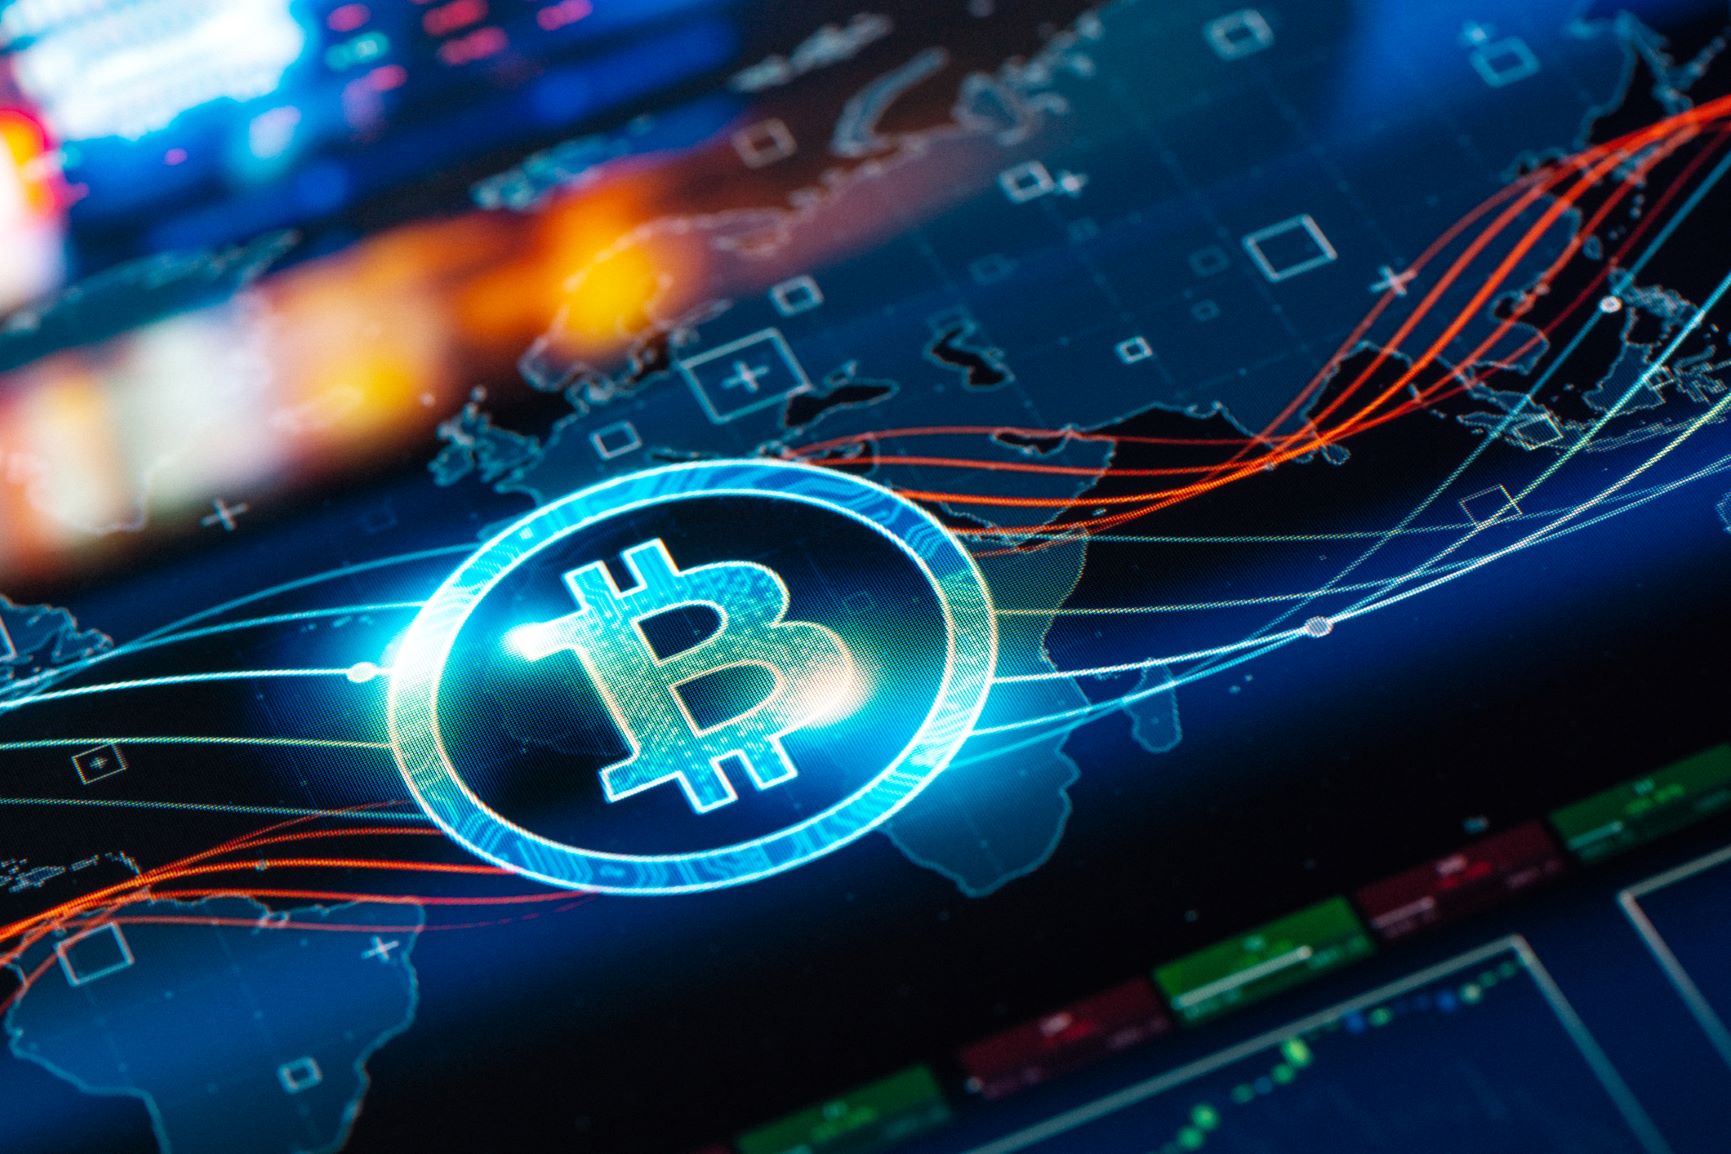 InfoMoney | Cirptos hoje: Bitcoin se mantém abaixo de US$ 17 mil e mercado cripto segue “travado” após crise da FTX